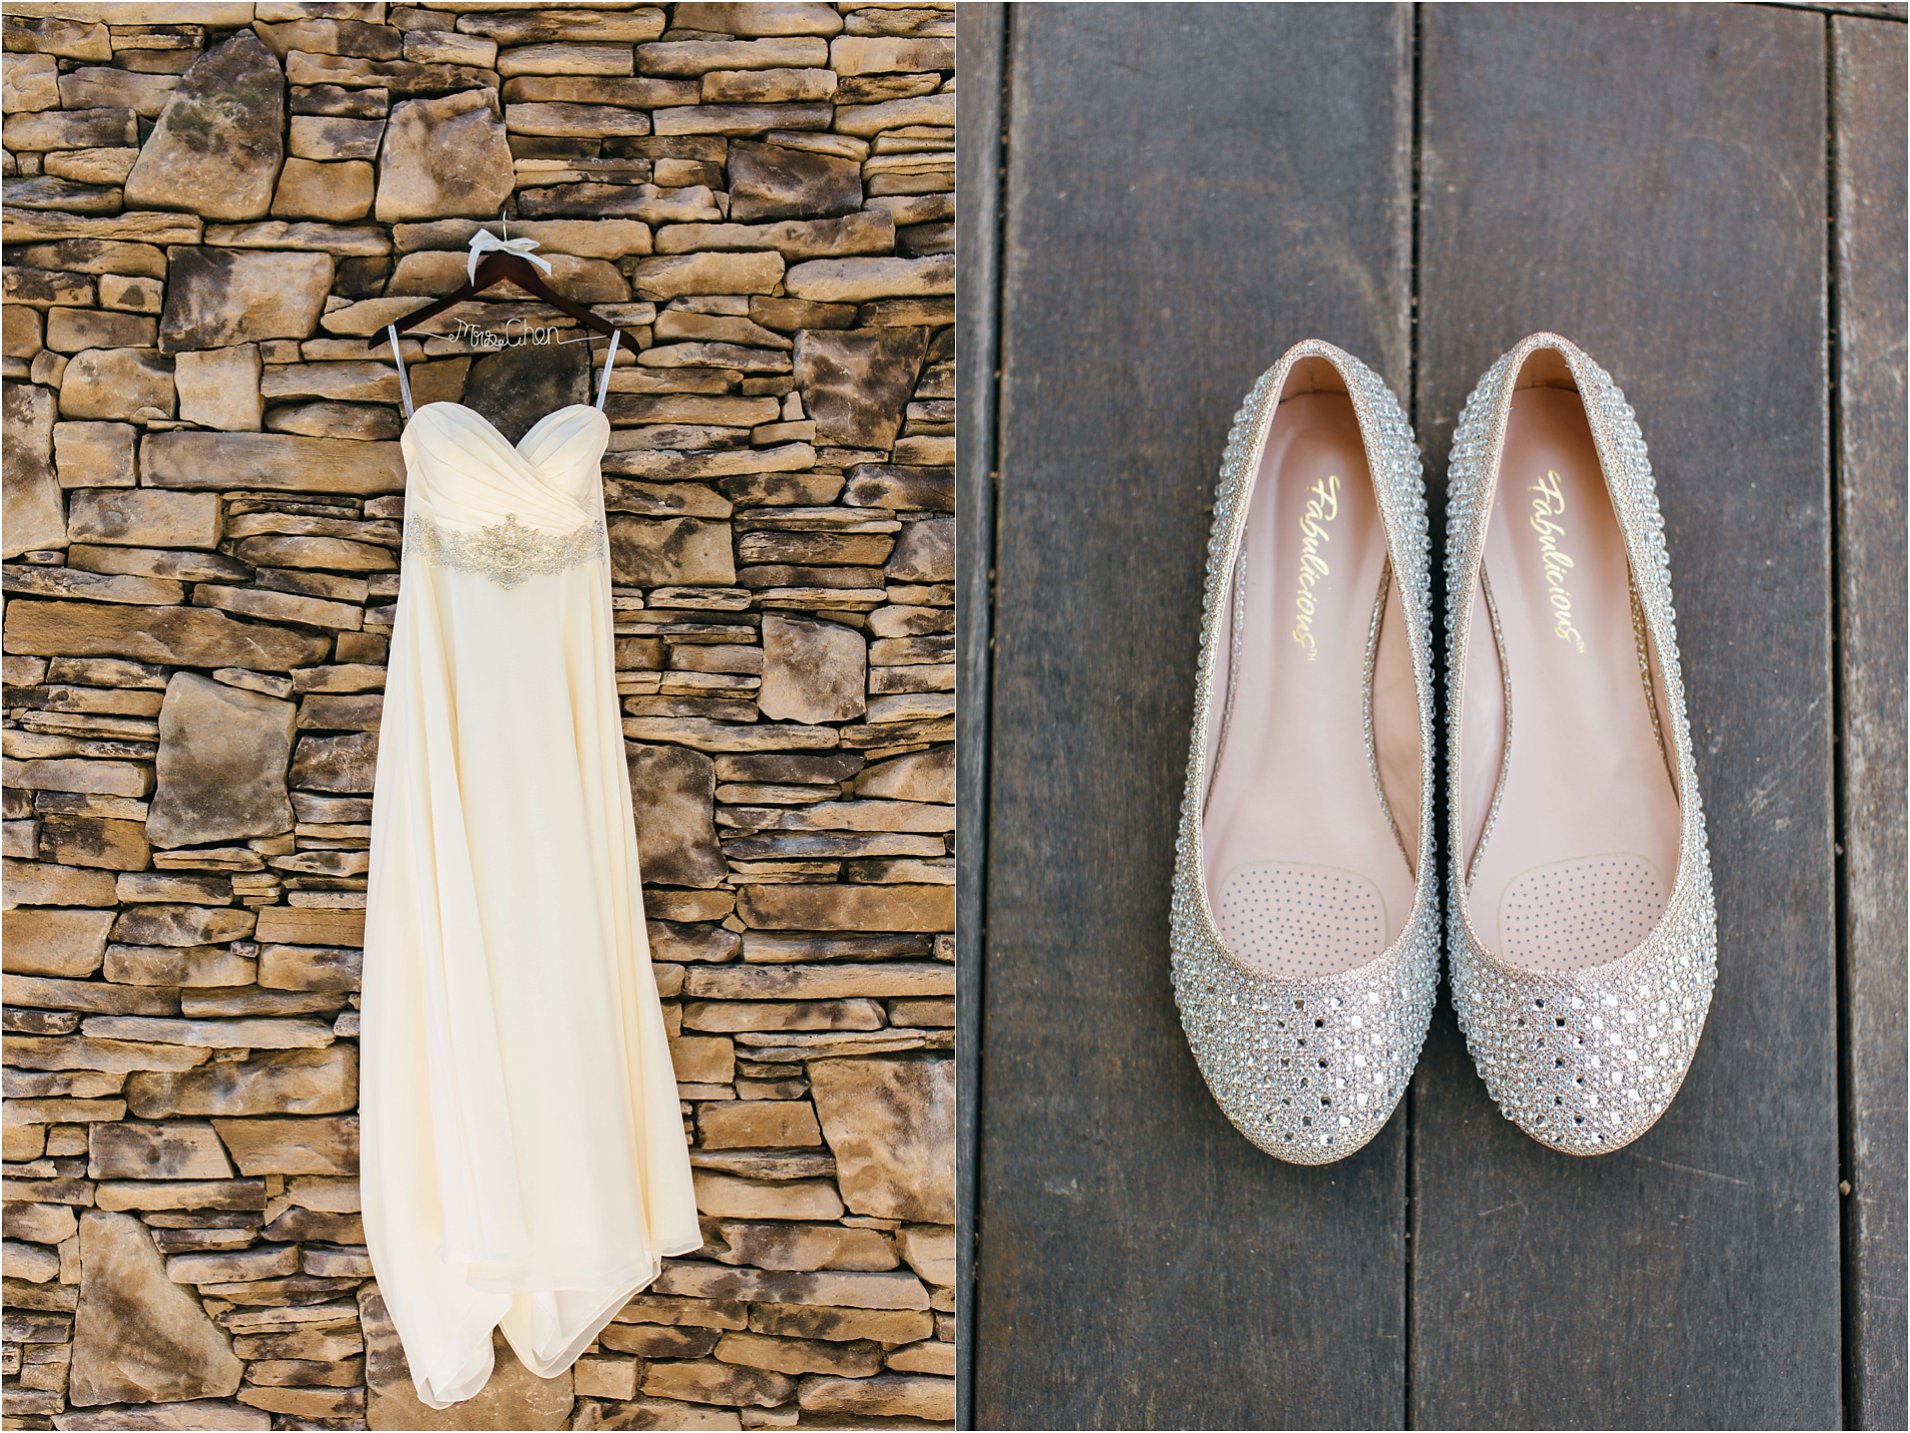 Wedding dress and wedding shoes